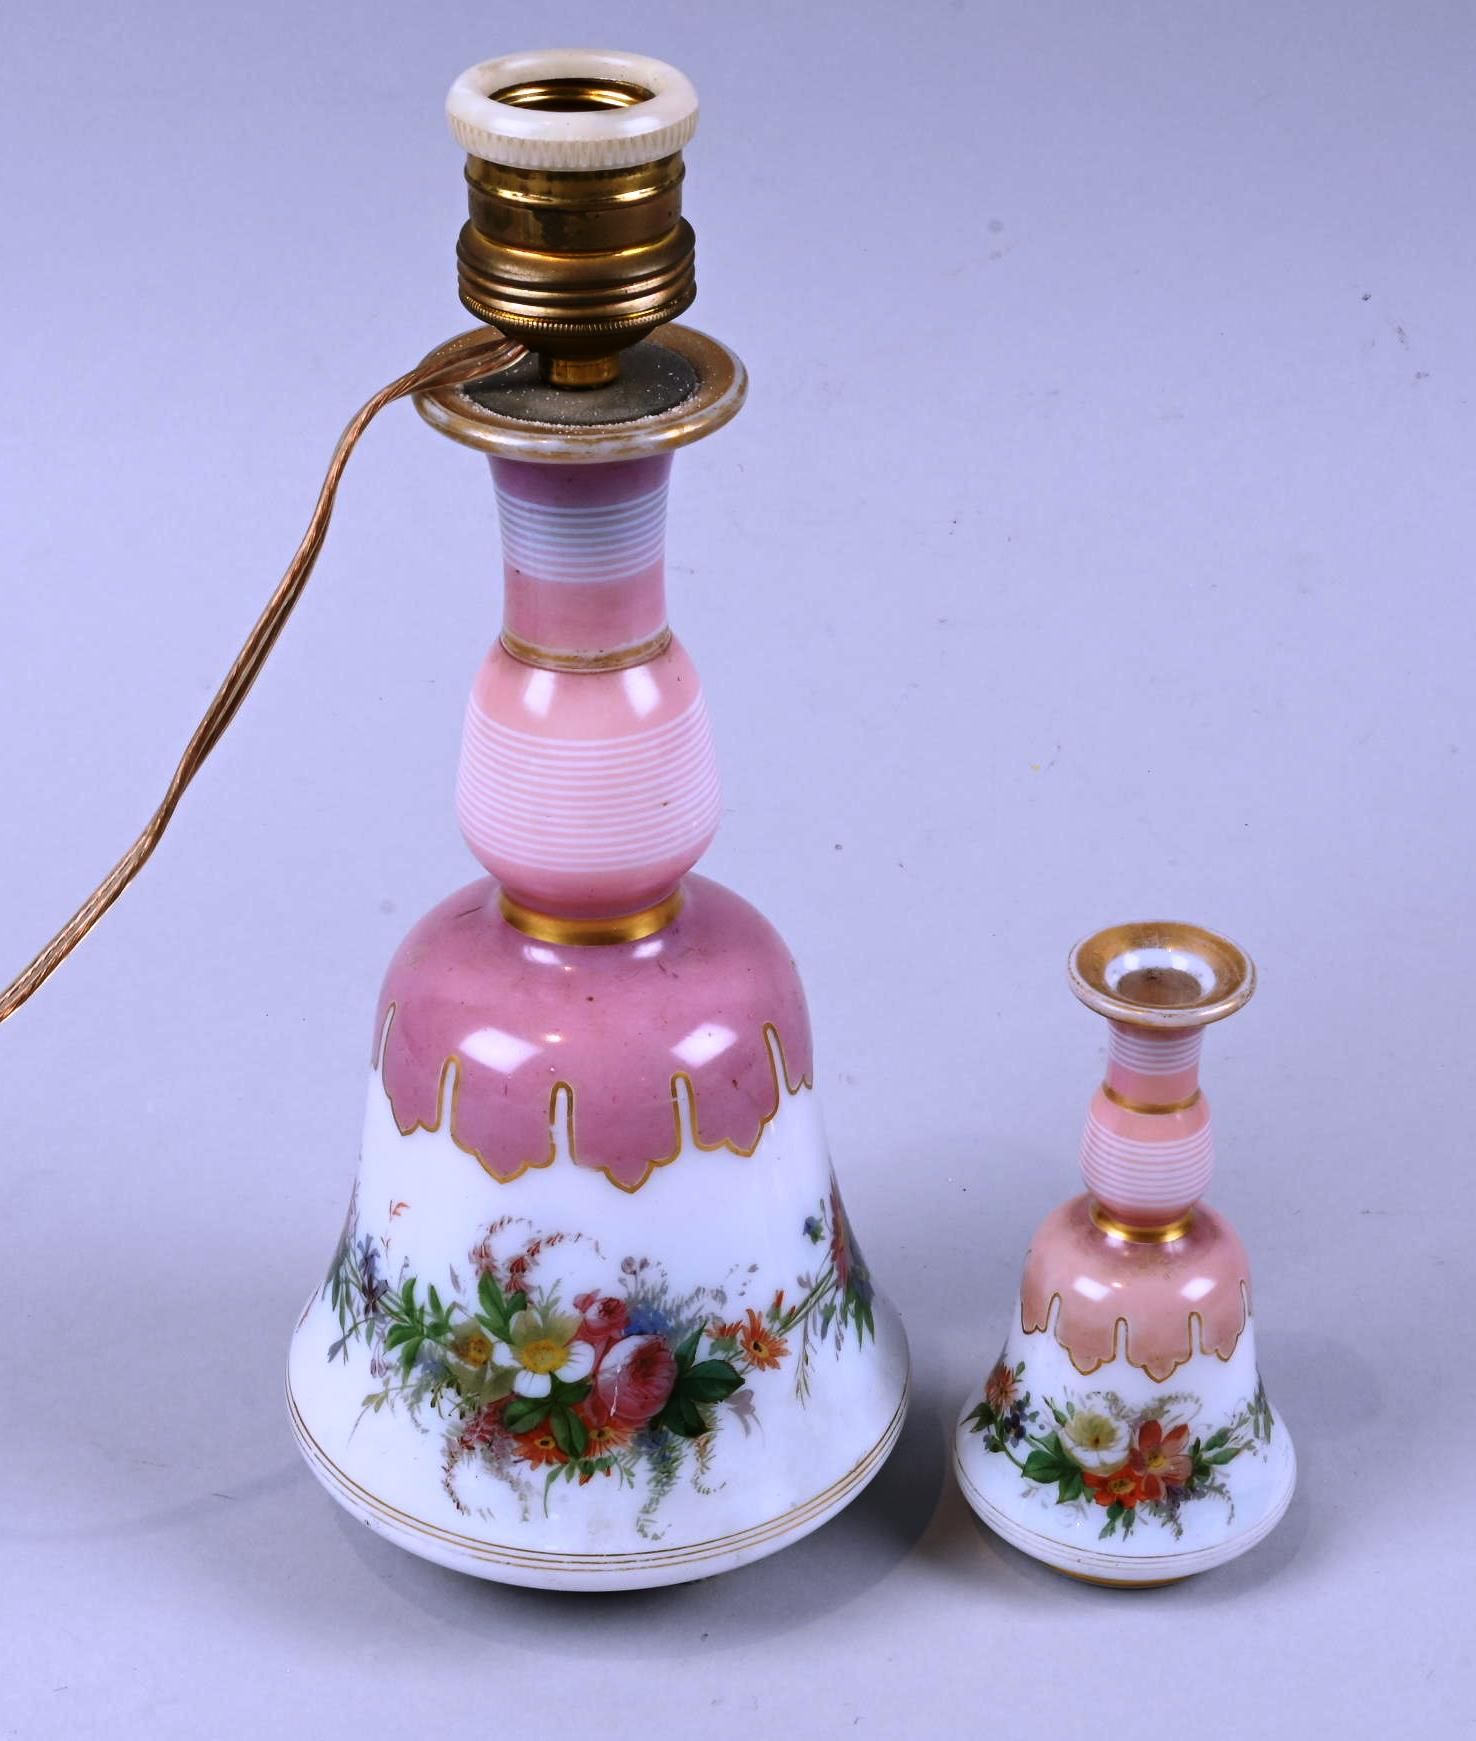 Suite de deux objets en opaline. 两个乳白色物体组成的套房。

一盏灯（高28厘米）和一个小花瓶（12厘米）。